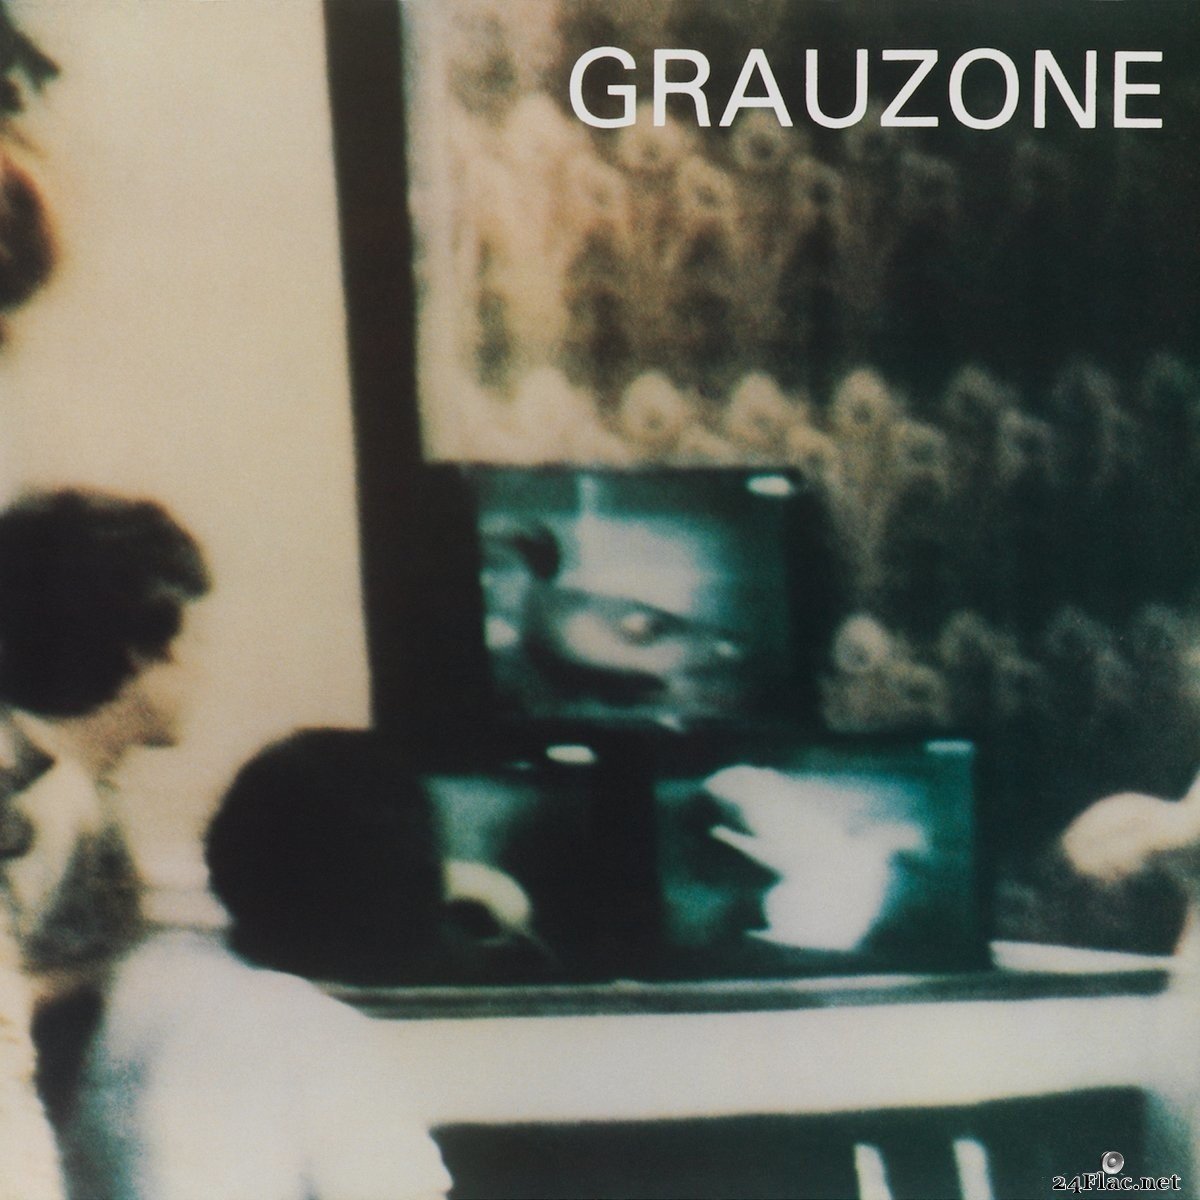 Grauzone - Grauzone (40 Years Anniversary Edition) (2021) FLAC